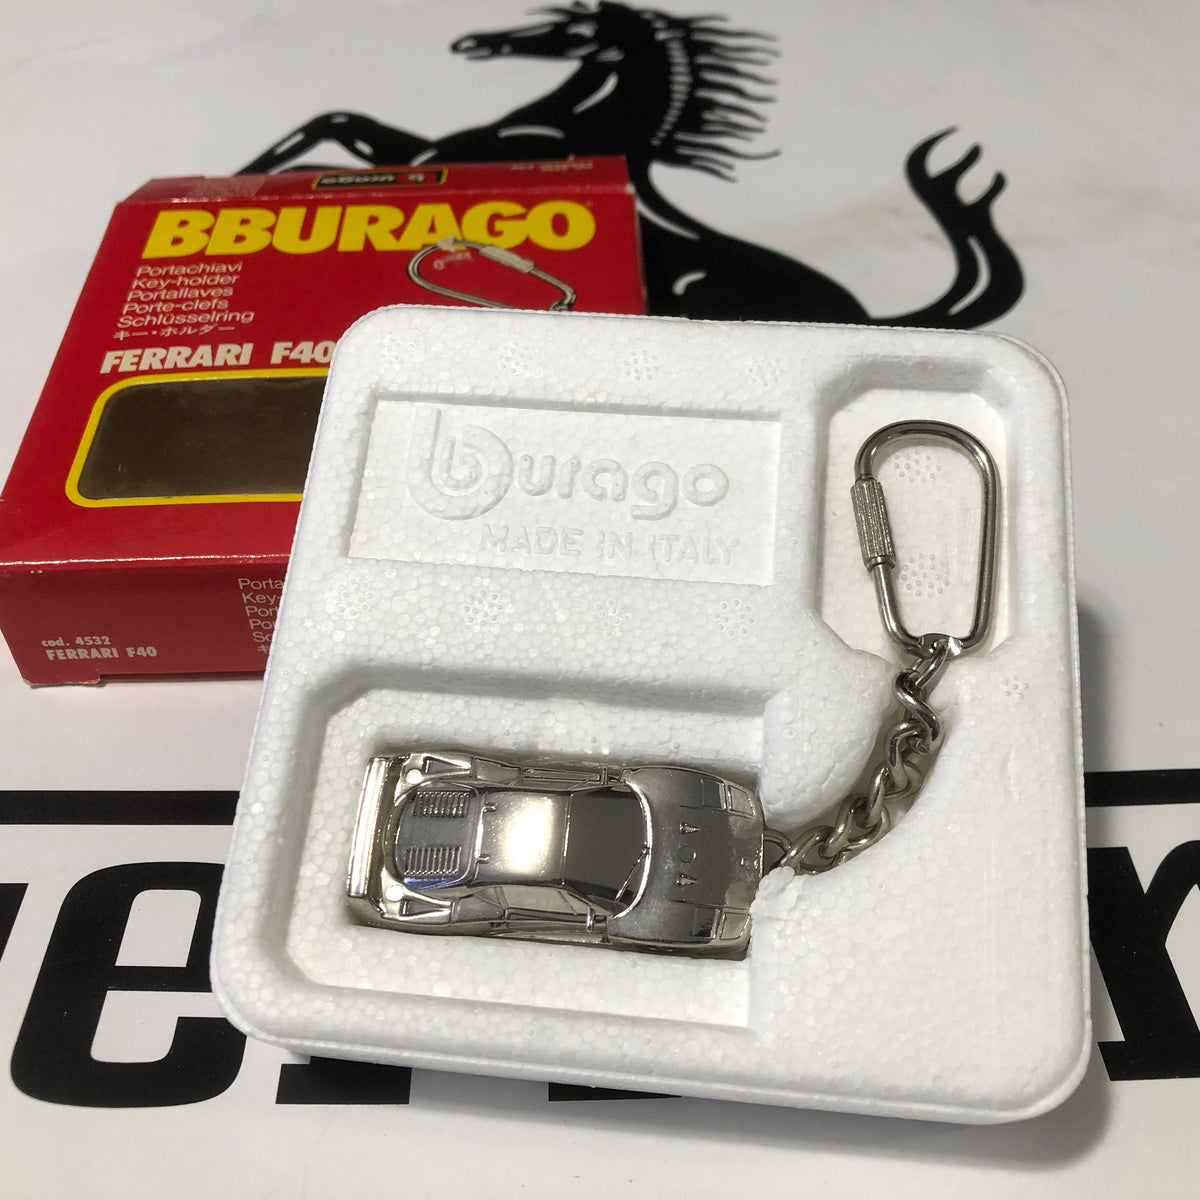 Ferrari F40 Chromed Key-chain / Key-holder by BBurago 1:87 (4532) – Albaco  Collectibles